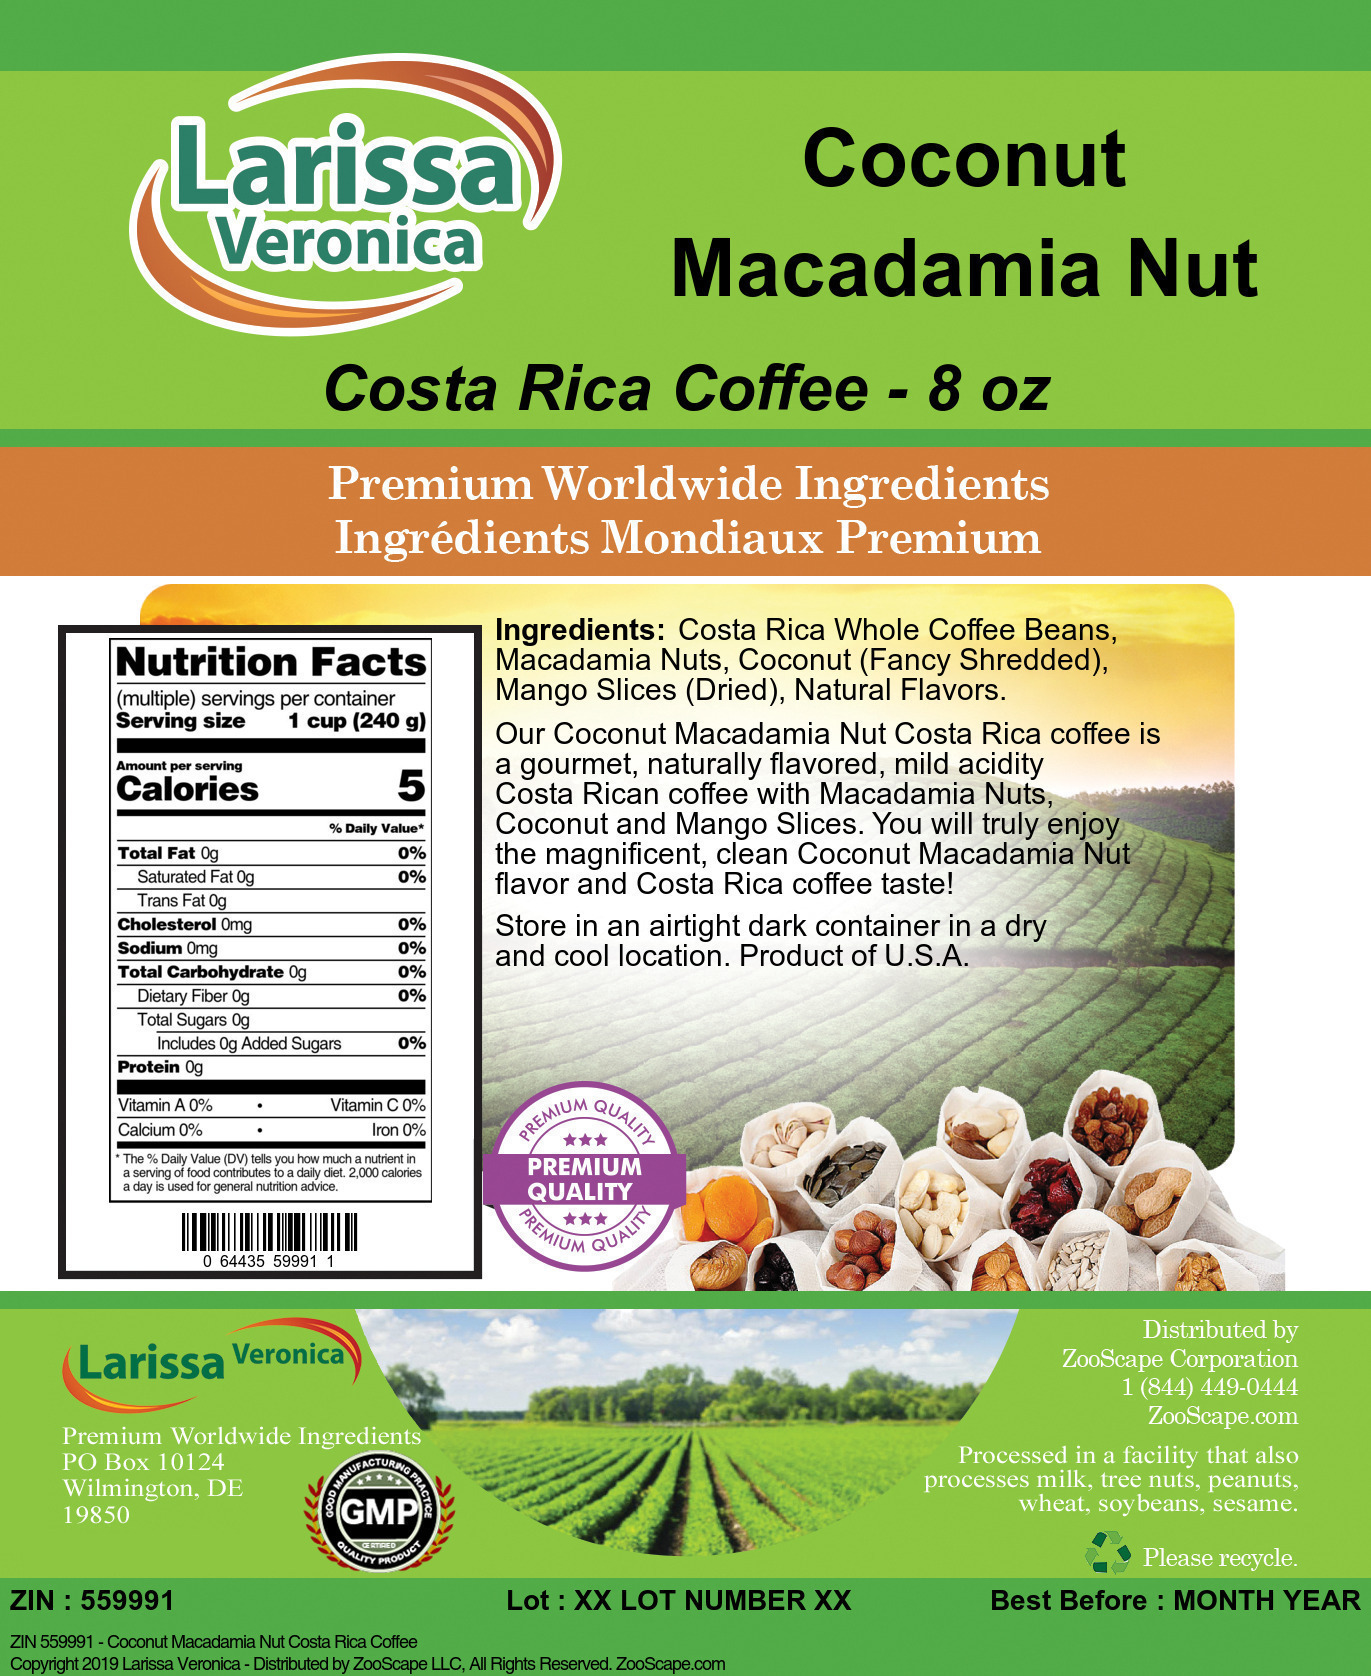 Coconut Macadamia Nut Costa Rica Coffee - Label